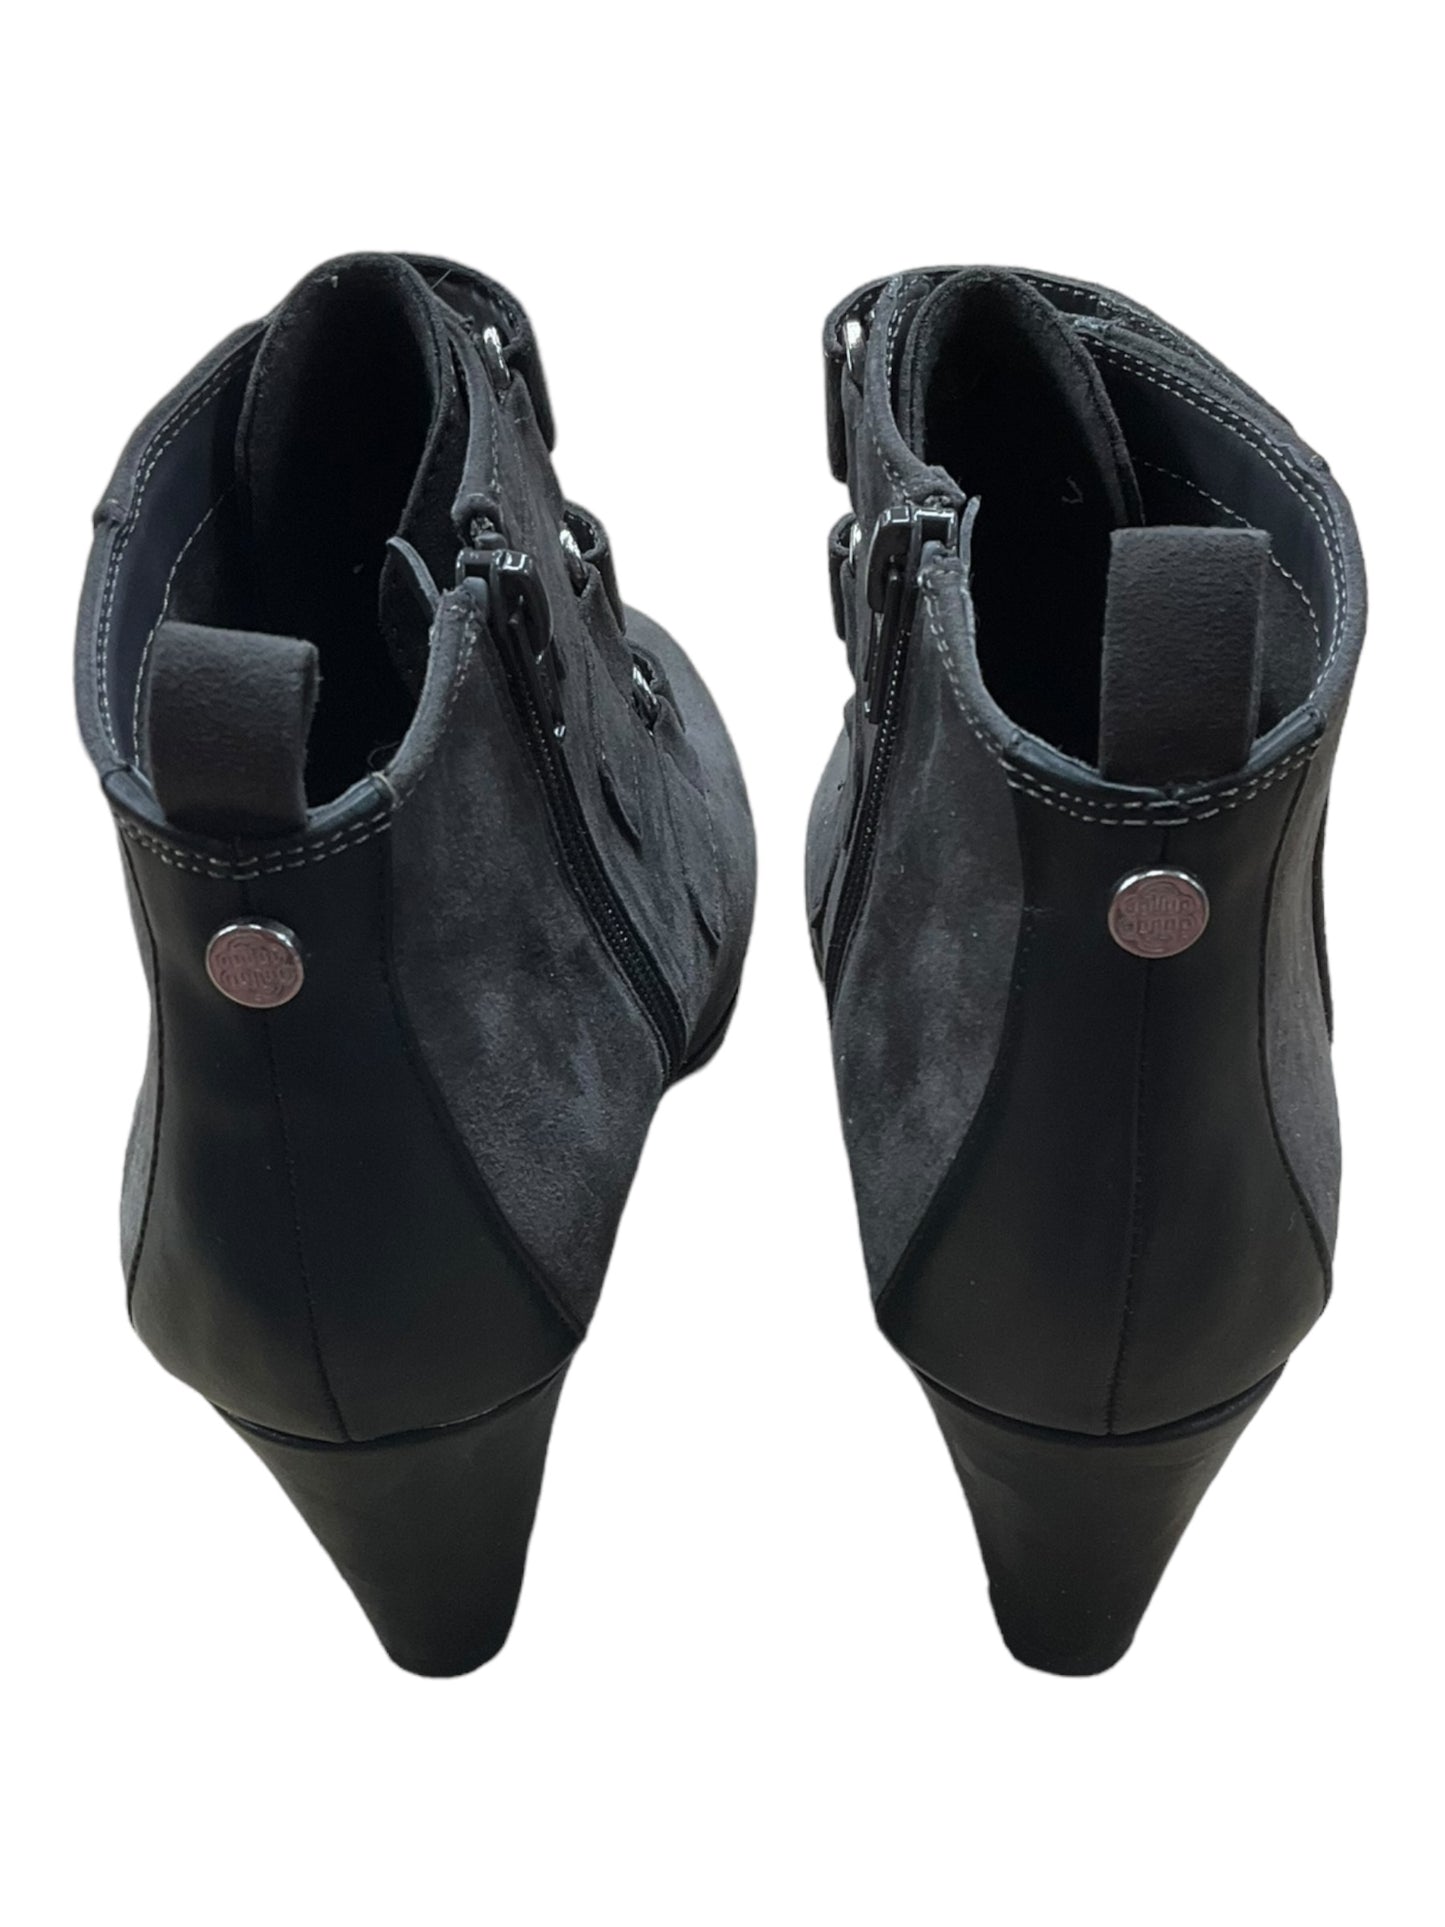 Shoes Heels Wedge By Dana Buchman  Size: 8.5